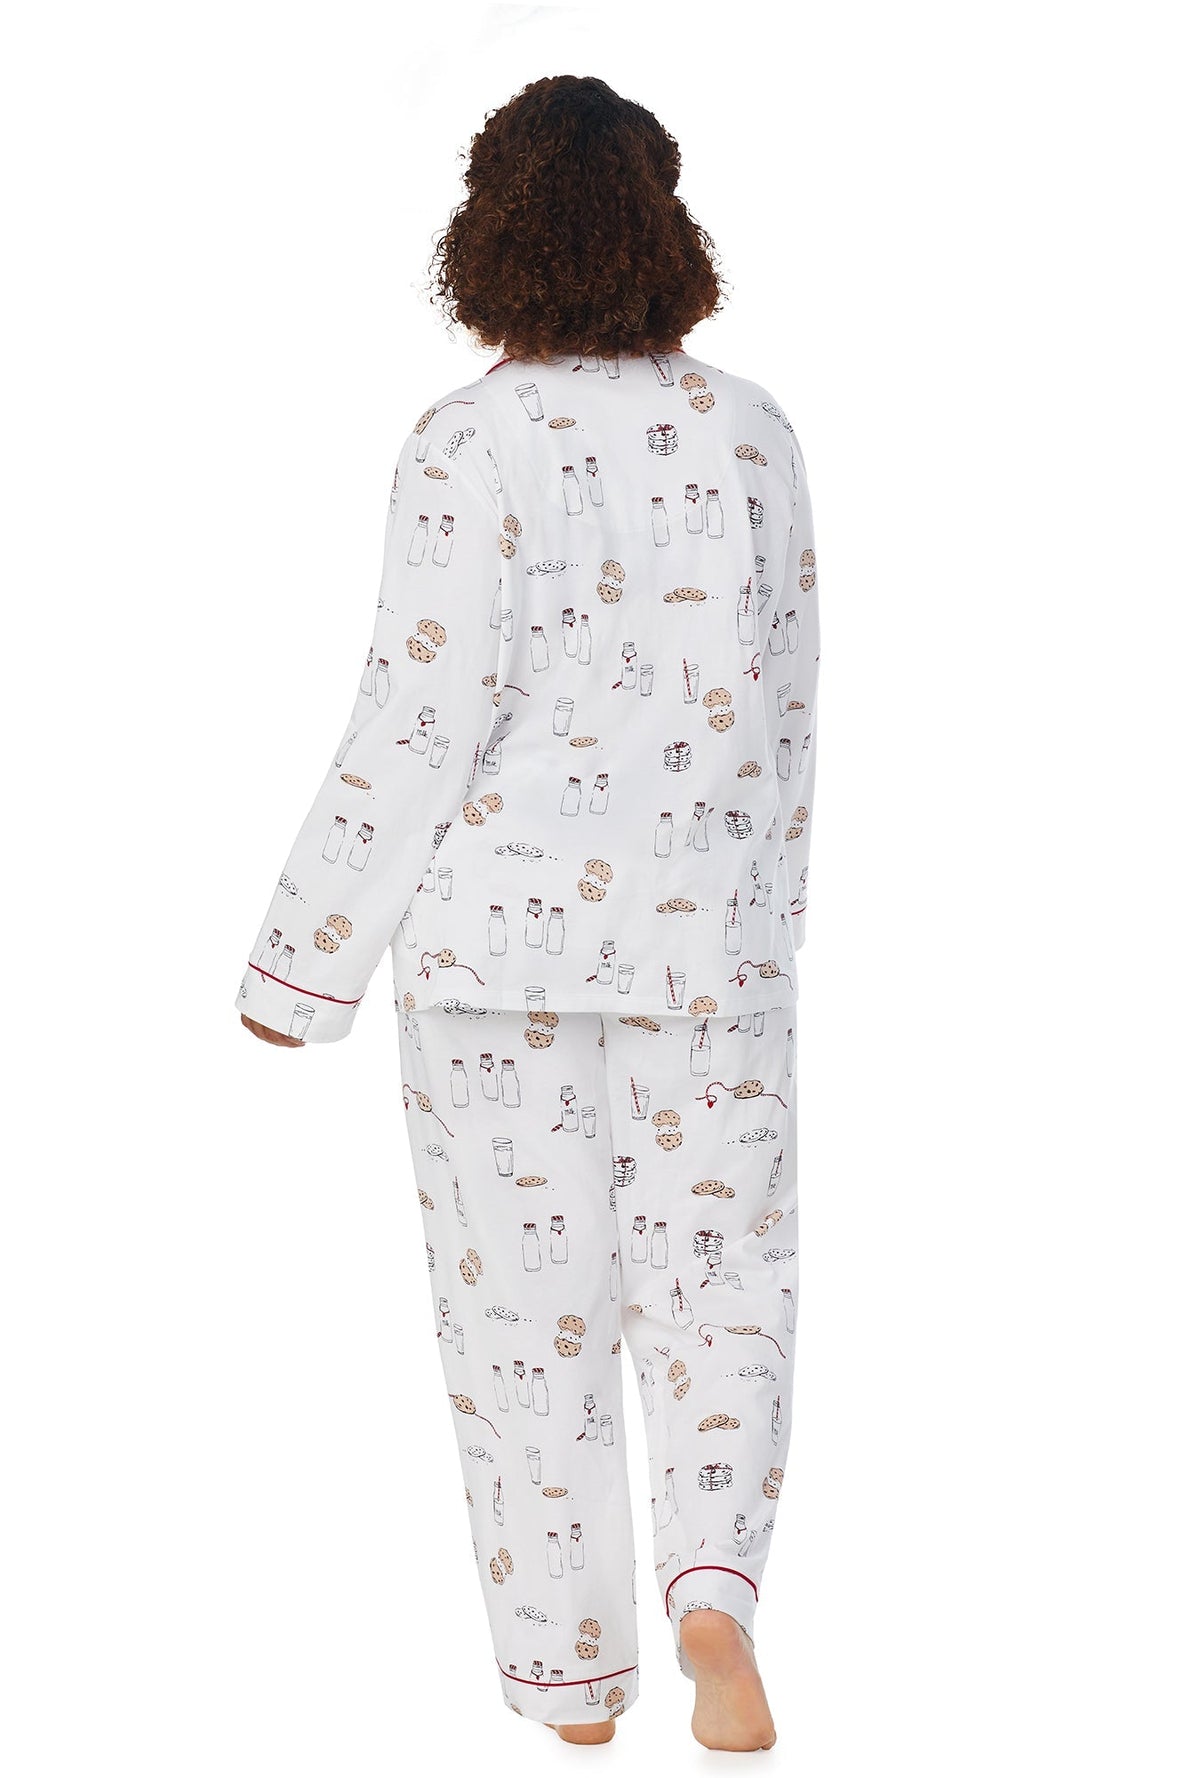 Milk and Cookies Long Sleeve Classic Stretch Jersey PJ Set - Bedhead Pajamas